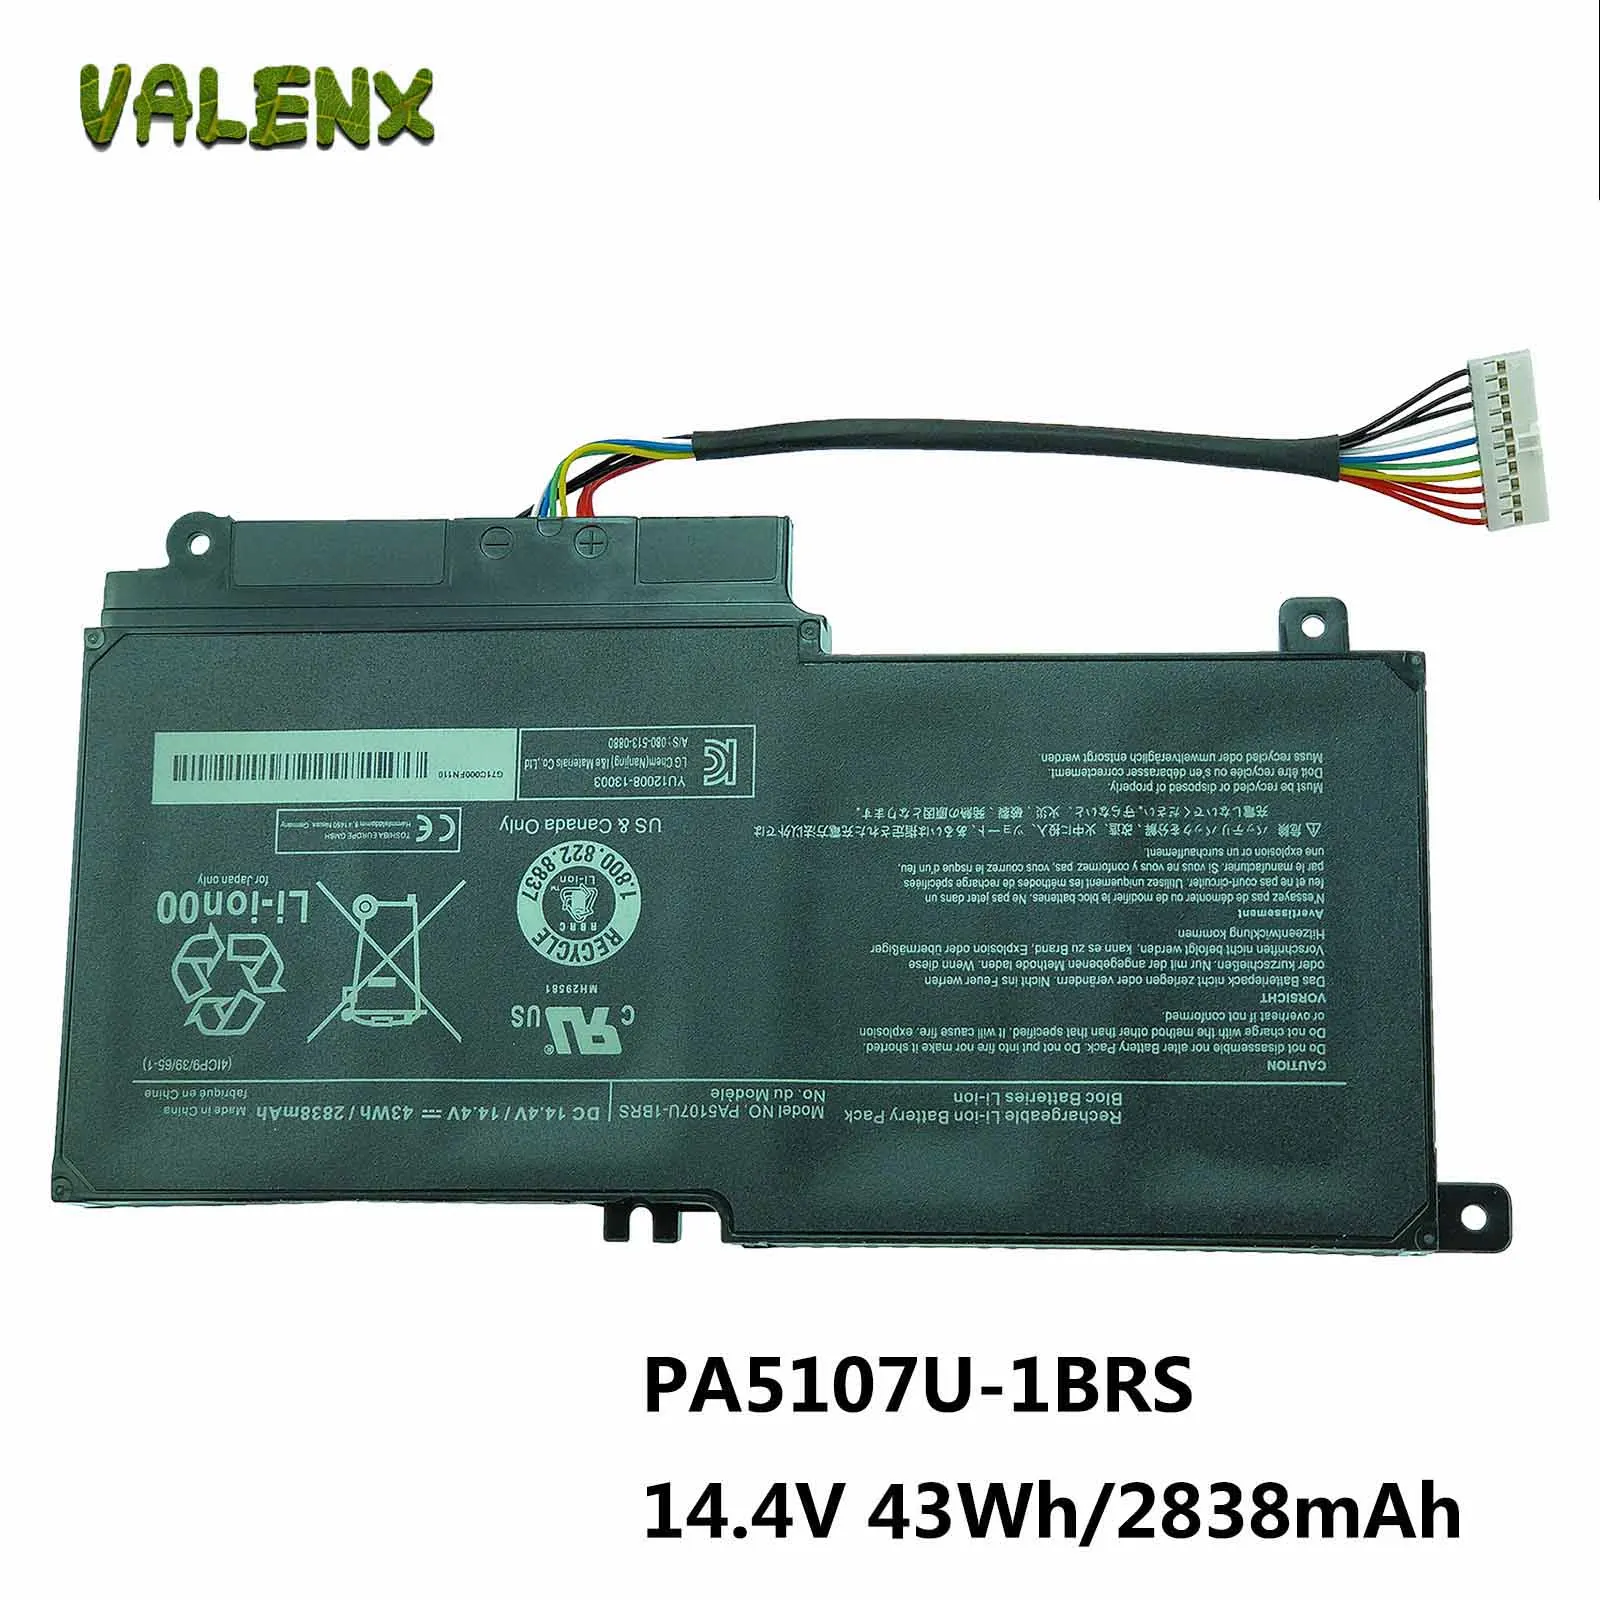 

PA5107U-1BRS Laptop Battery for Toshiba Satellite L50 L50-A L55 L55t P50 P50-A P50-B P55t-a P55t-A5116 S55-A5295 S55t-A5202